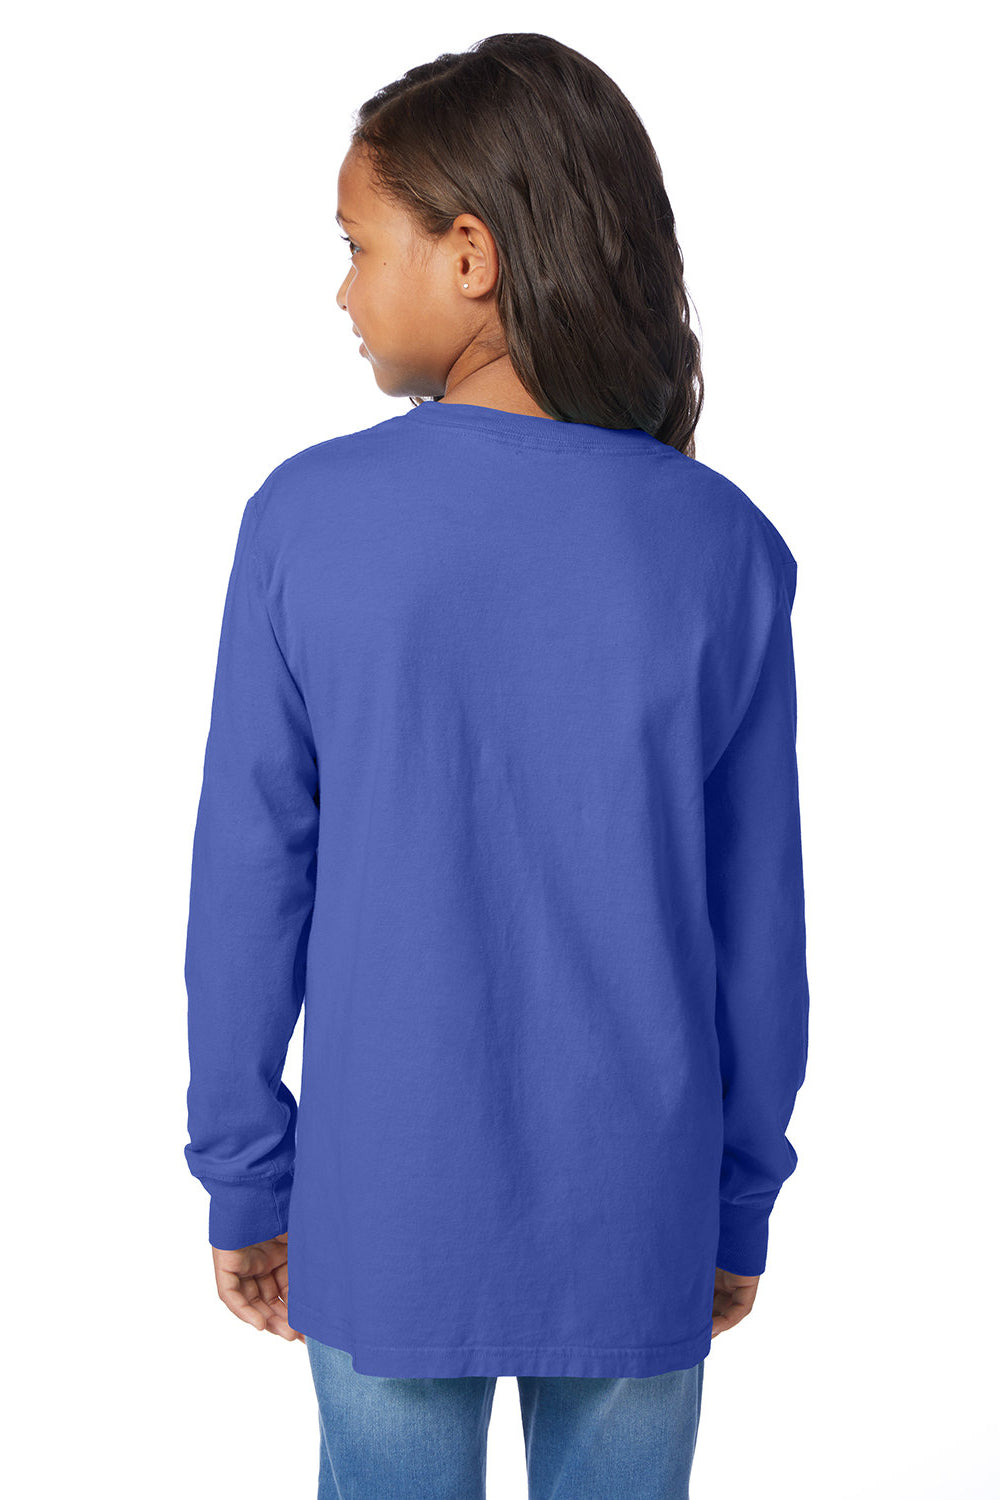 ComfortWash By Hanes GDH275 Youth Garment Dyed Long Sleeve Crewneck T-Shirt Deep Forte Blue Model Back